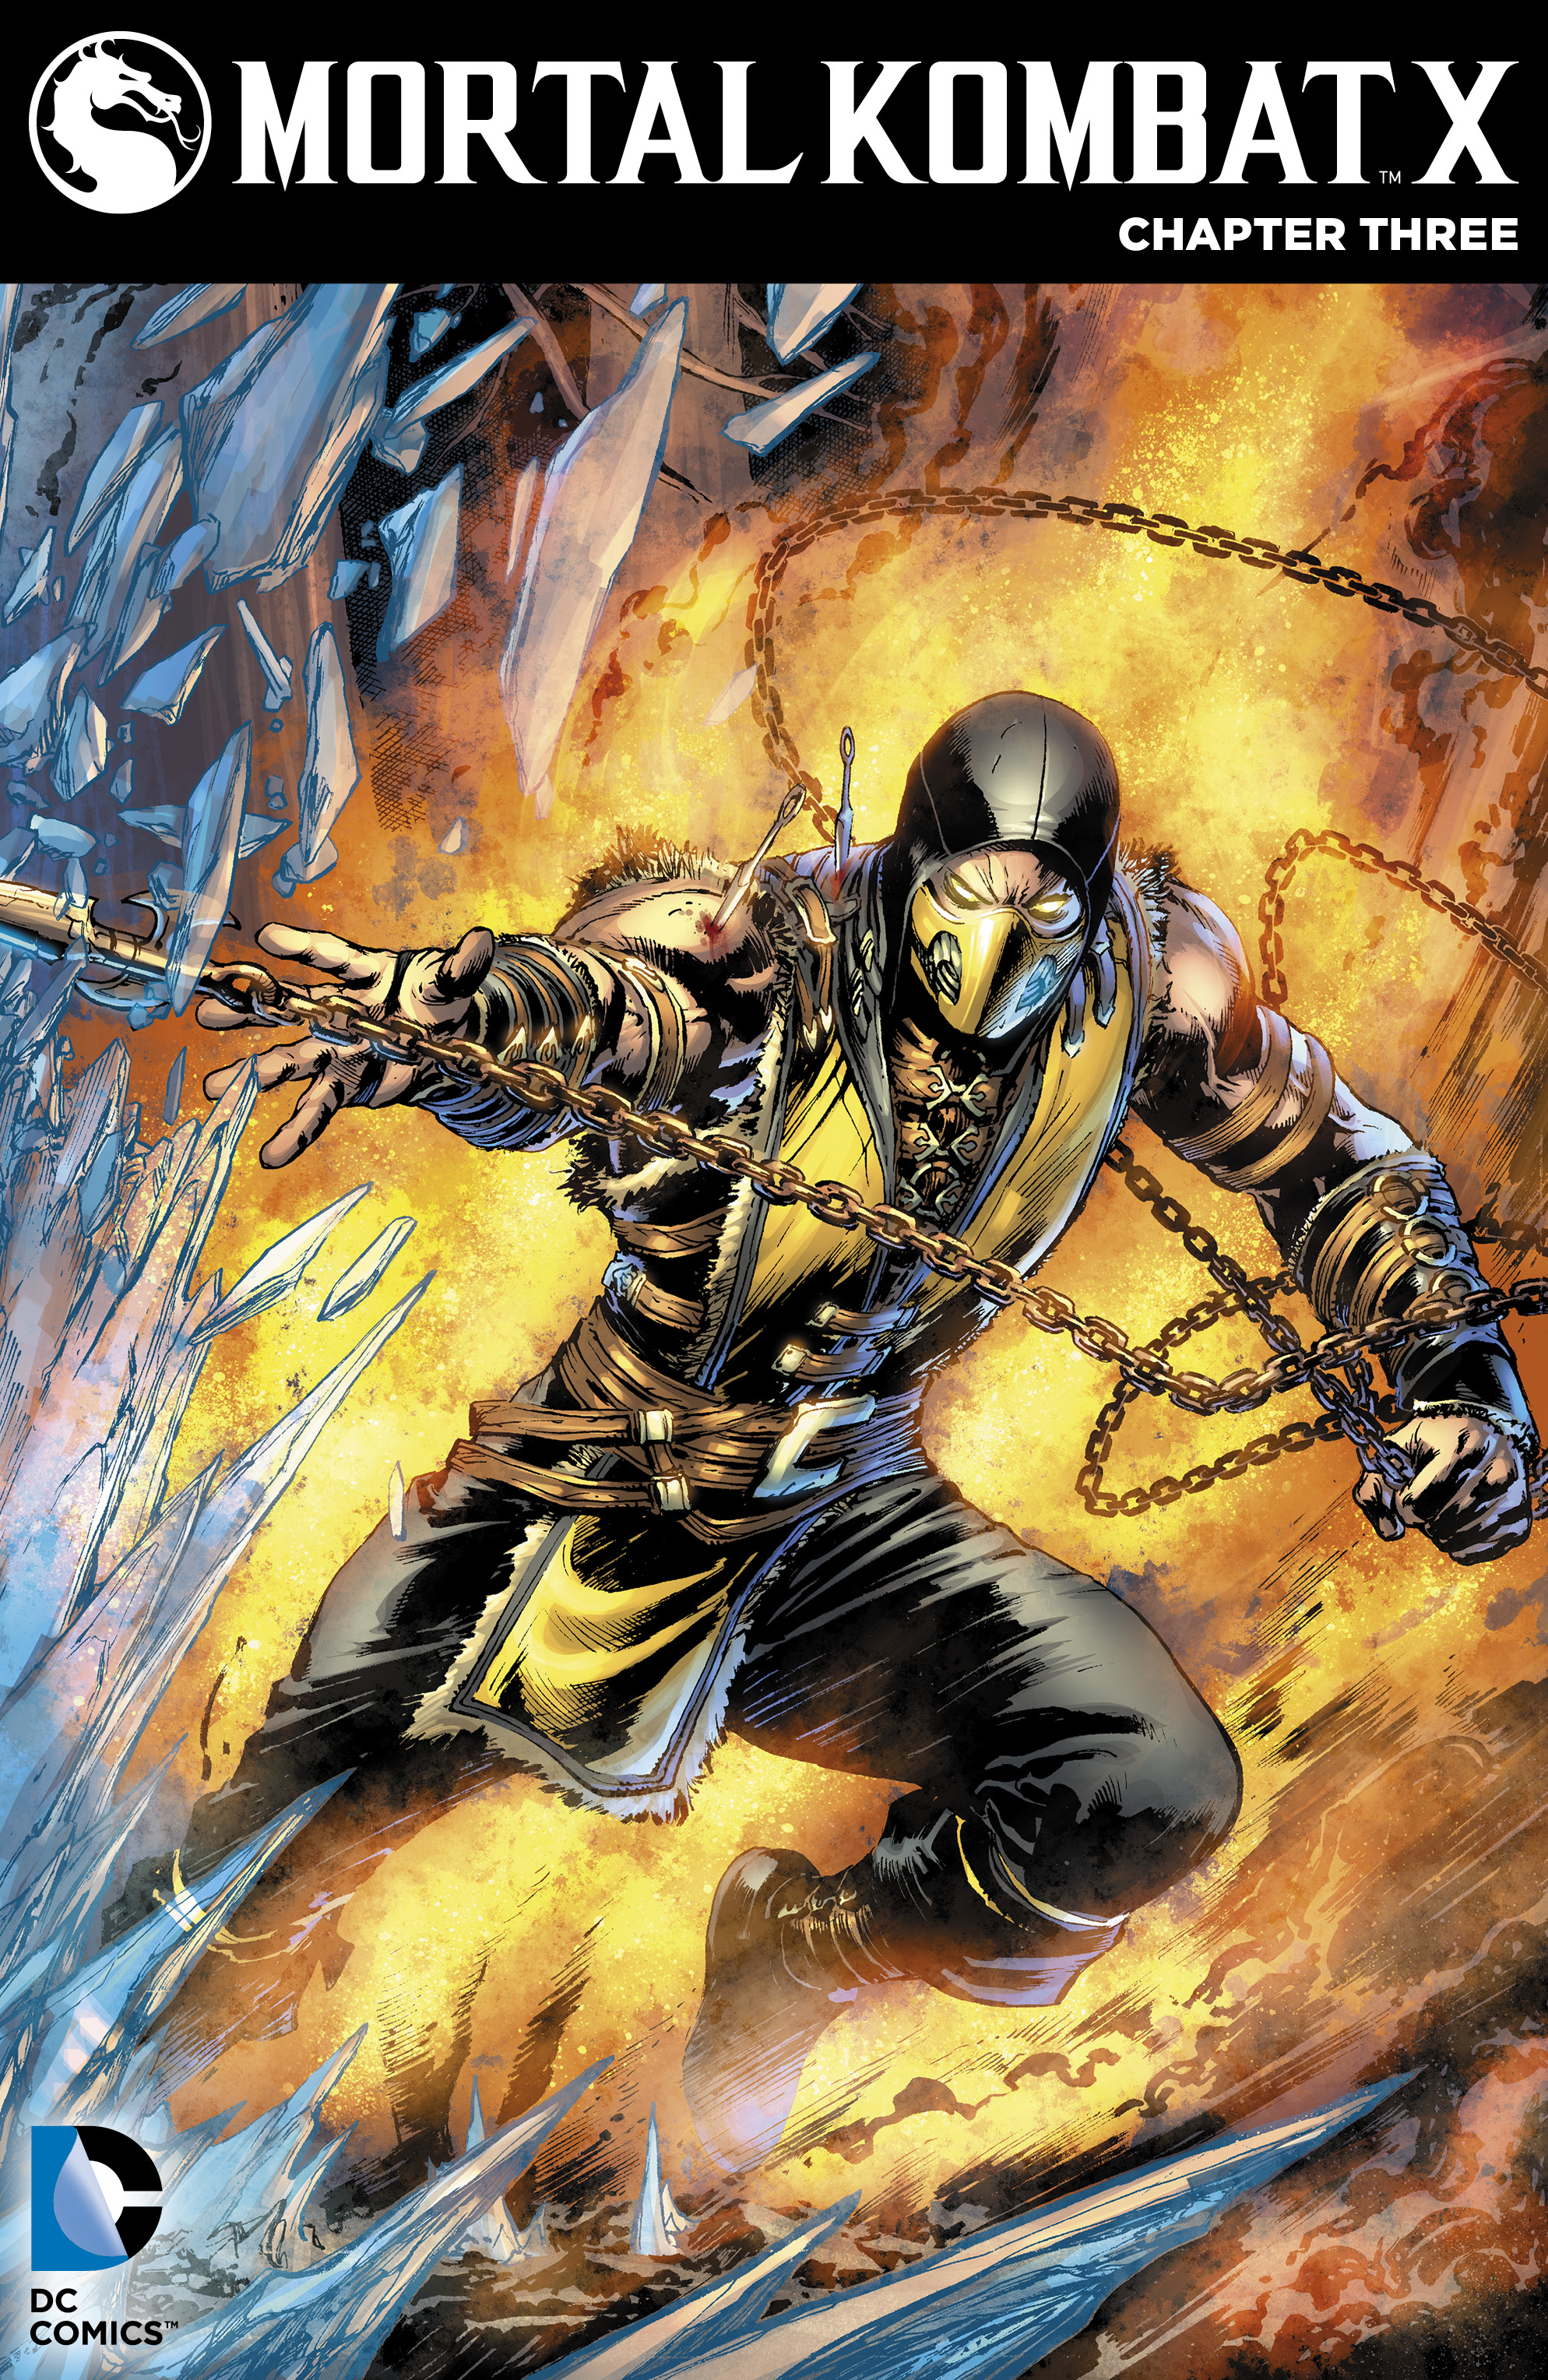 Mortal Kombat X #3 preview images